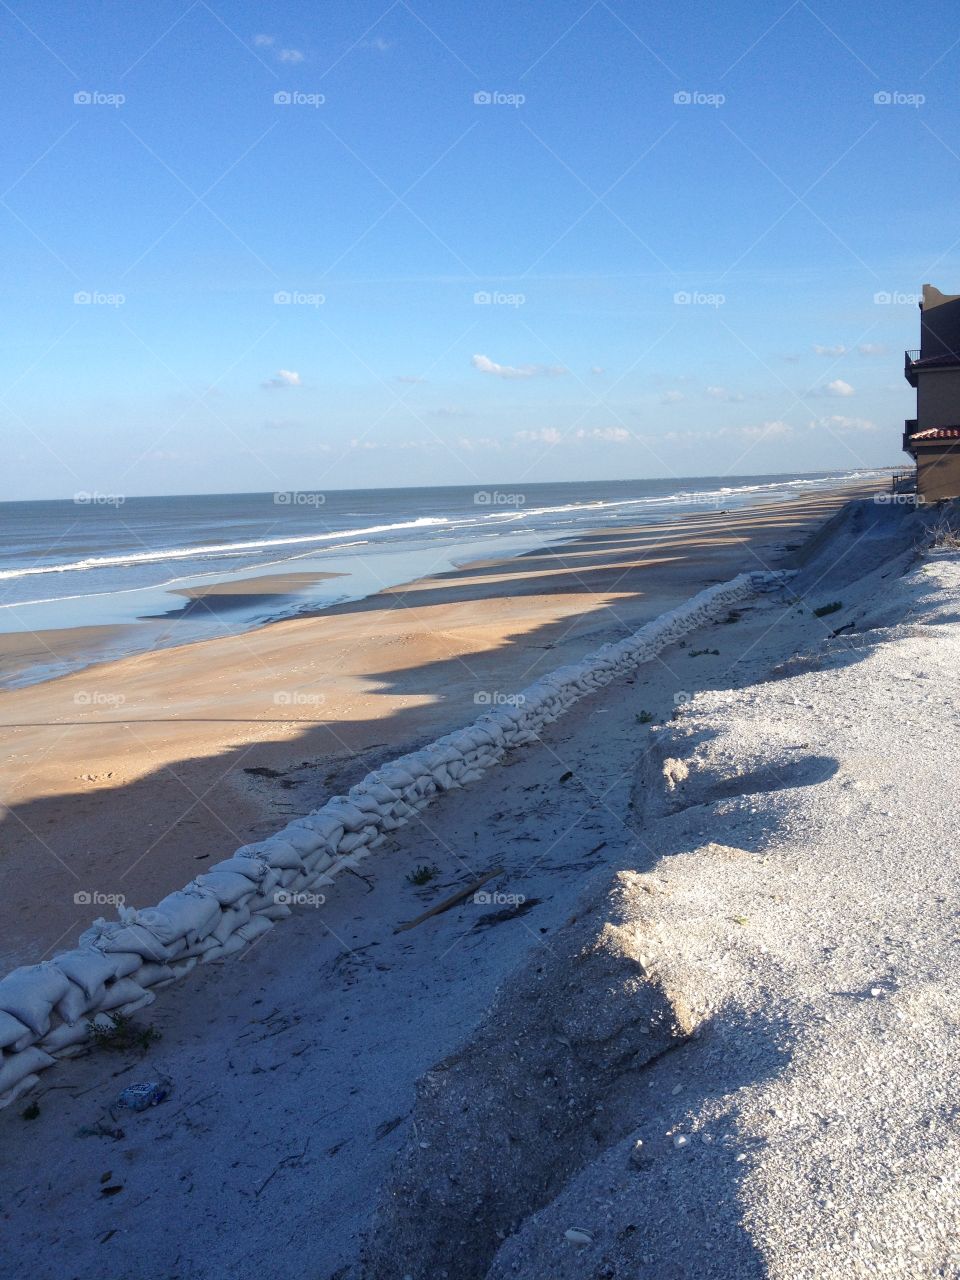 Jacksonville Florida: Beach erosion after Hurricane Matthew in 2016. Picture taken March 2017